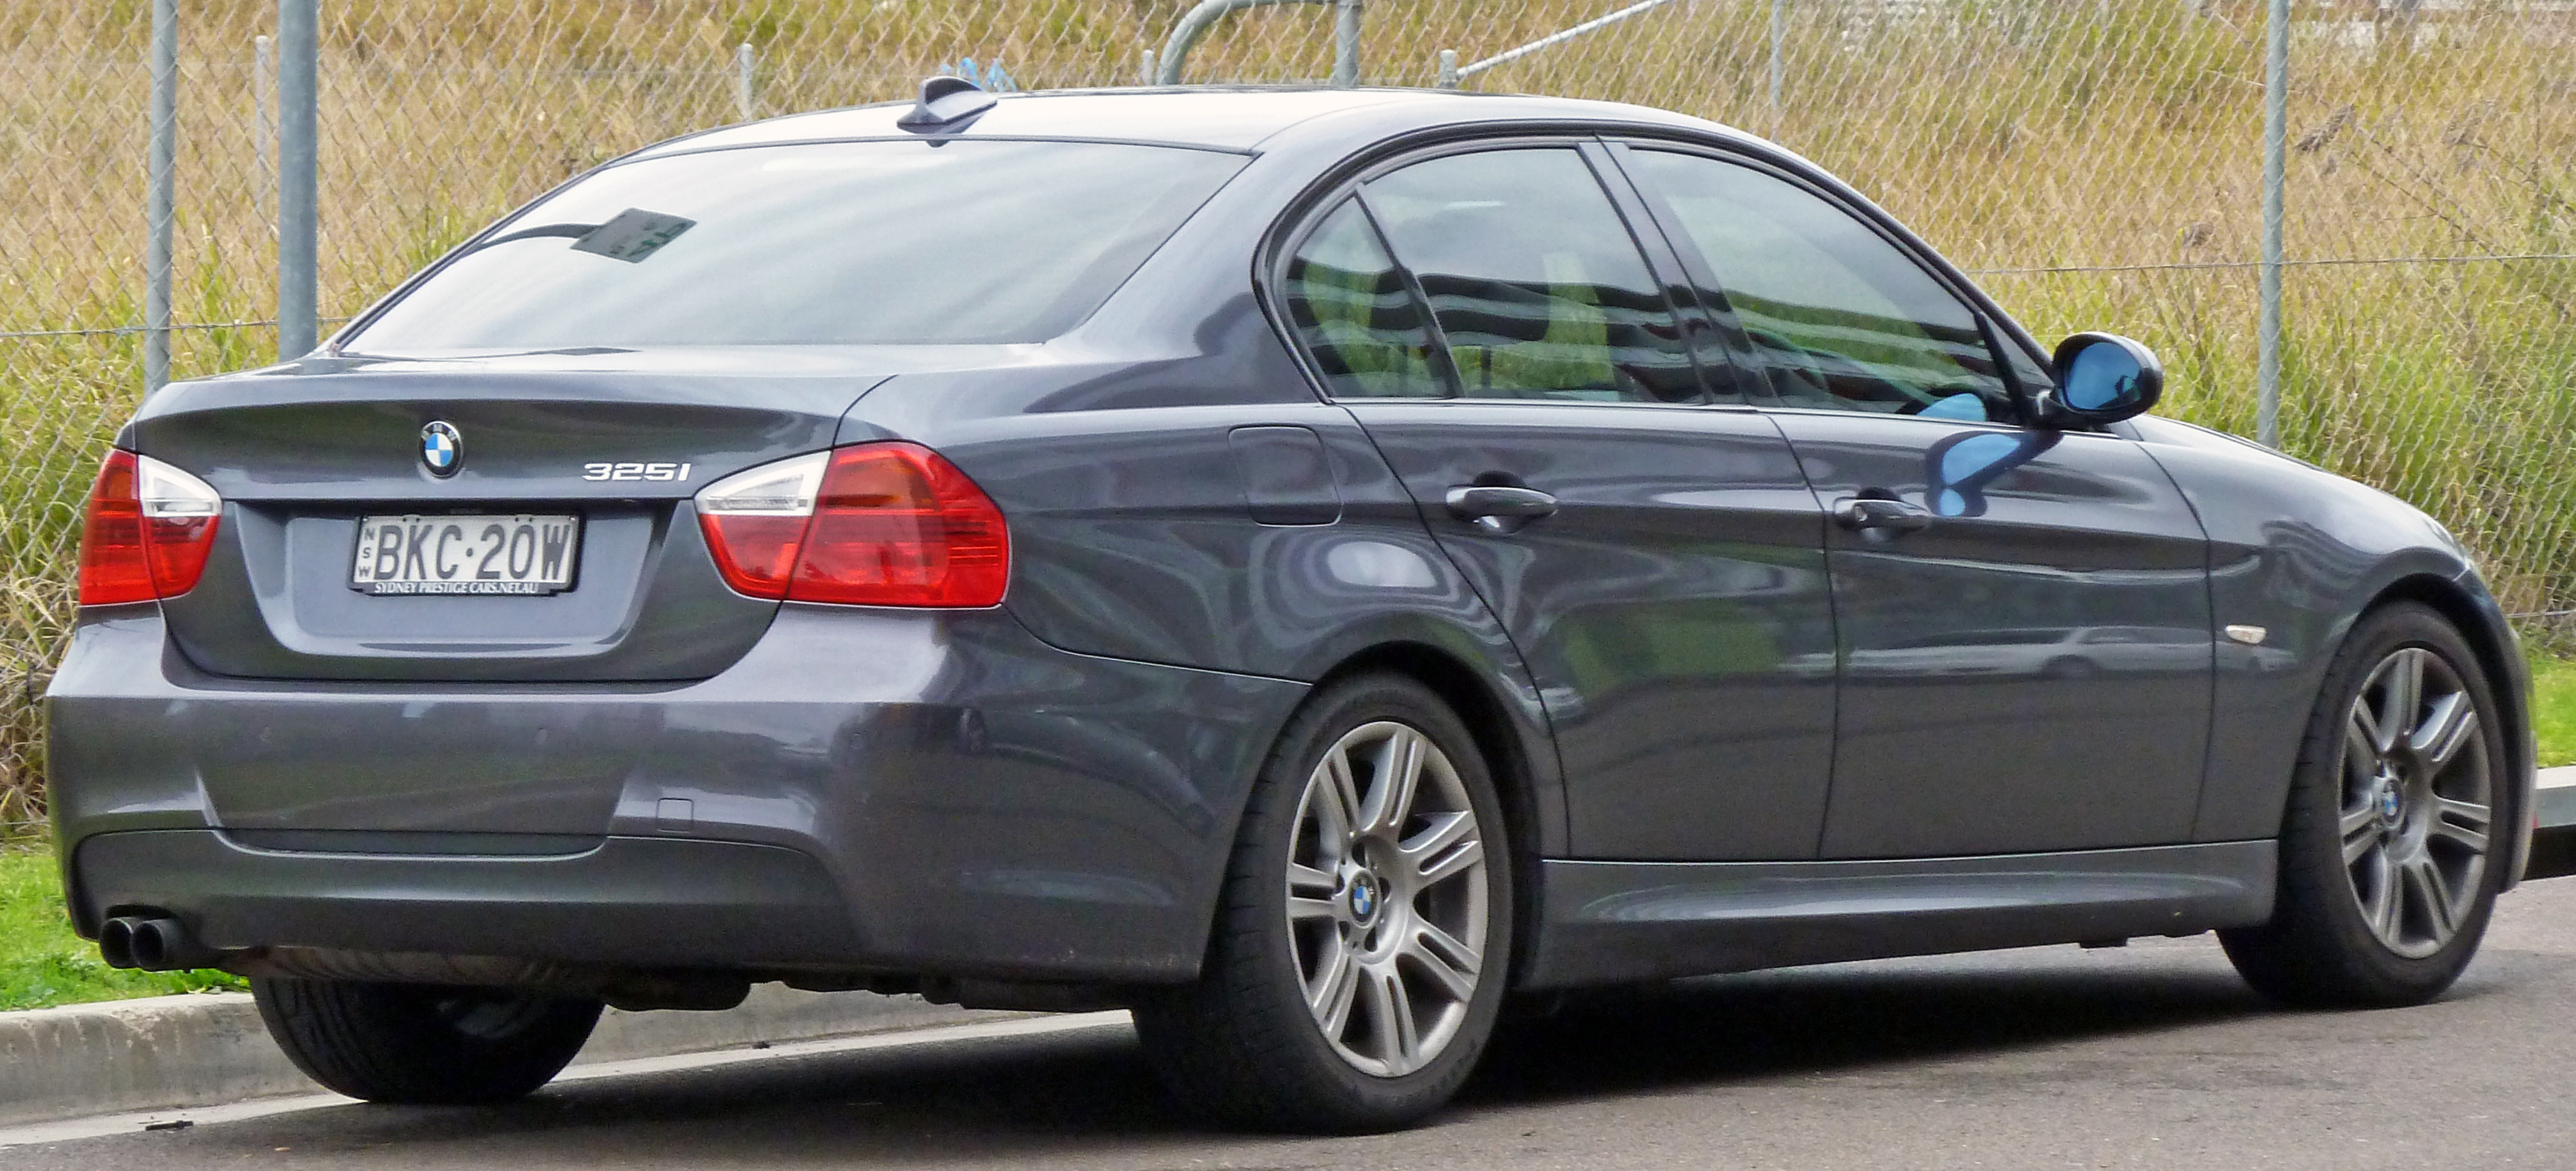 File:2005-2008 BMW 325i (E90) sedan 03.jpg - Wikimedia Commons